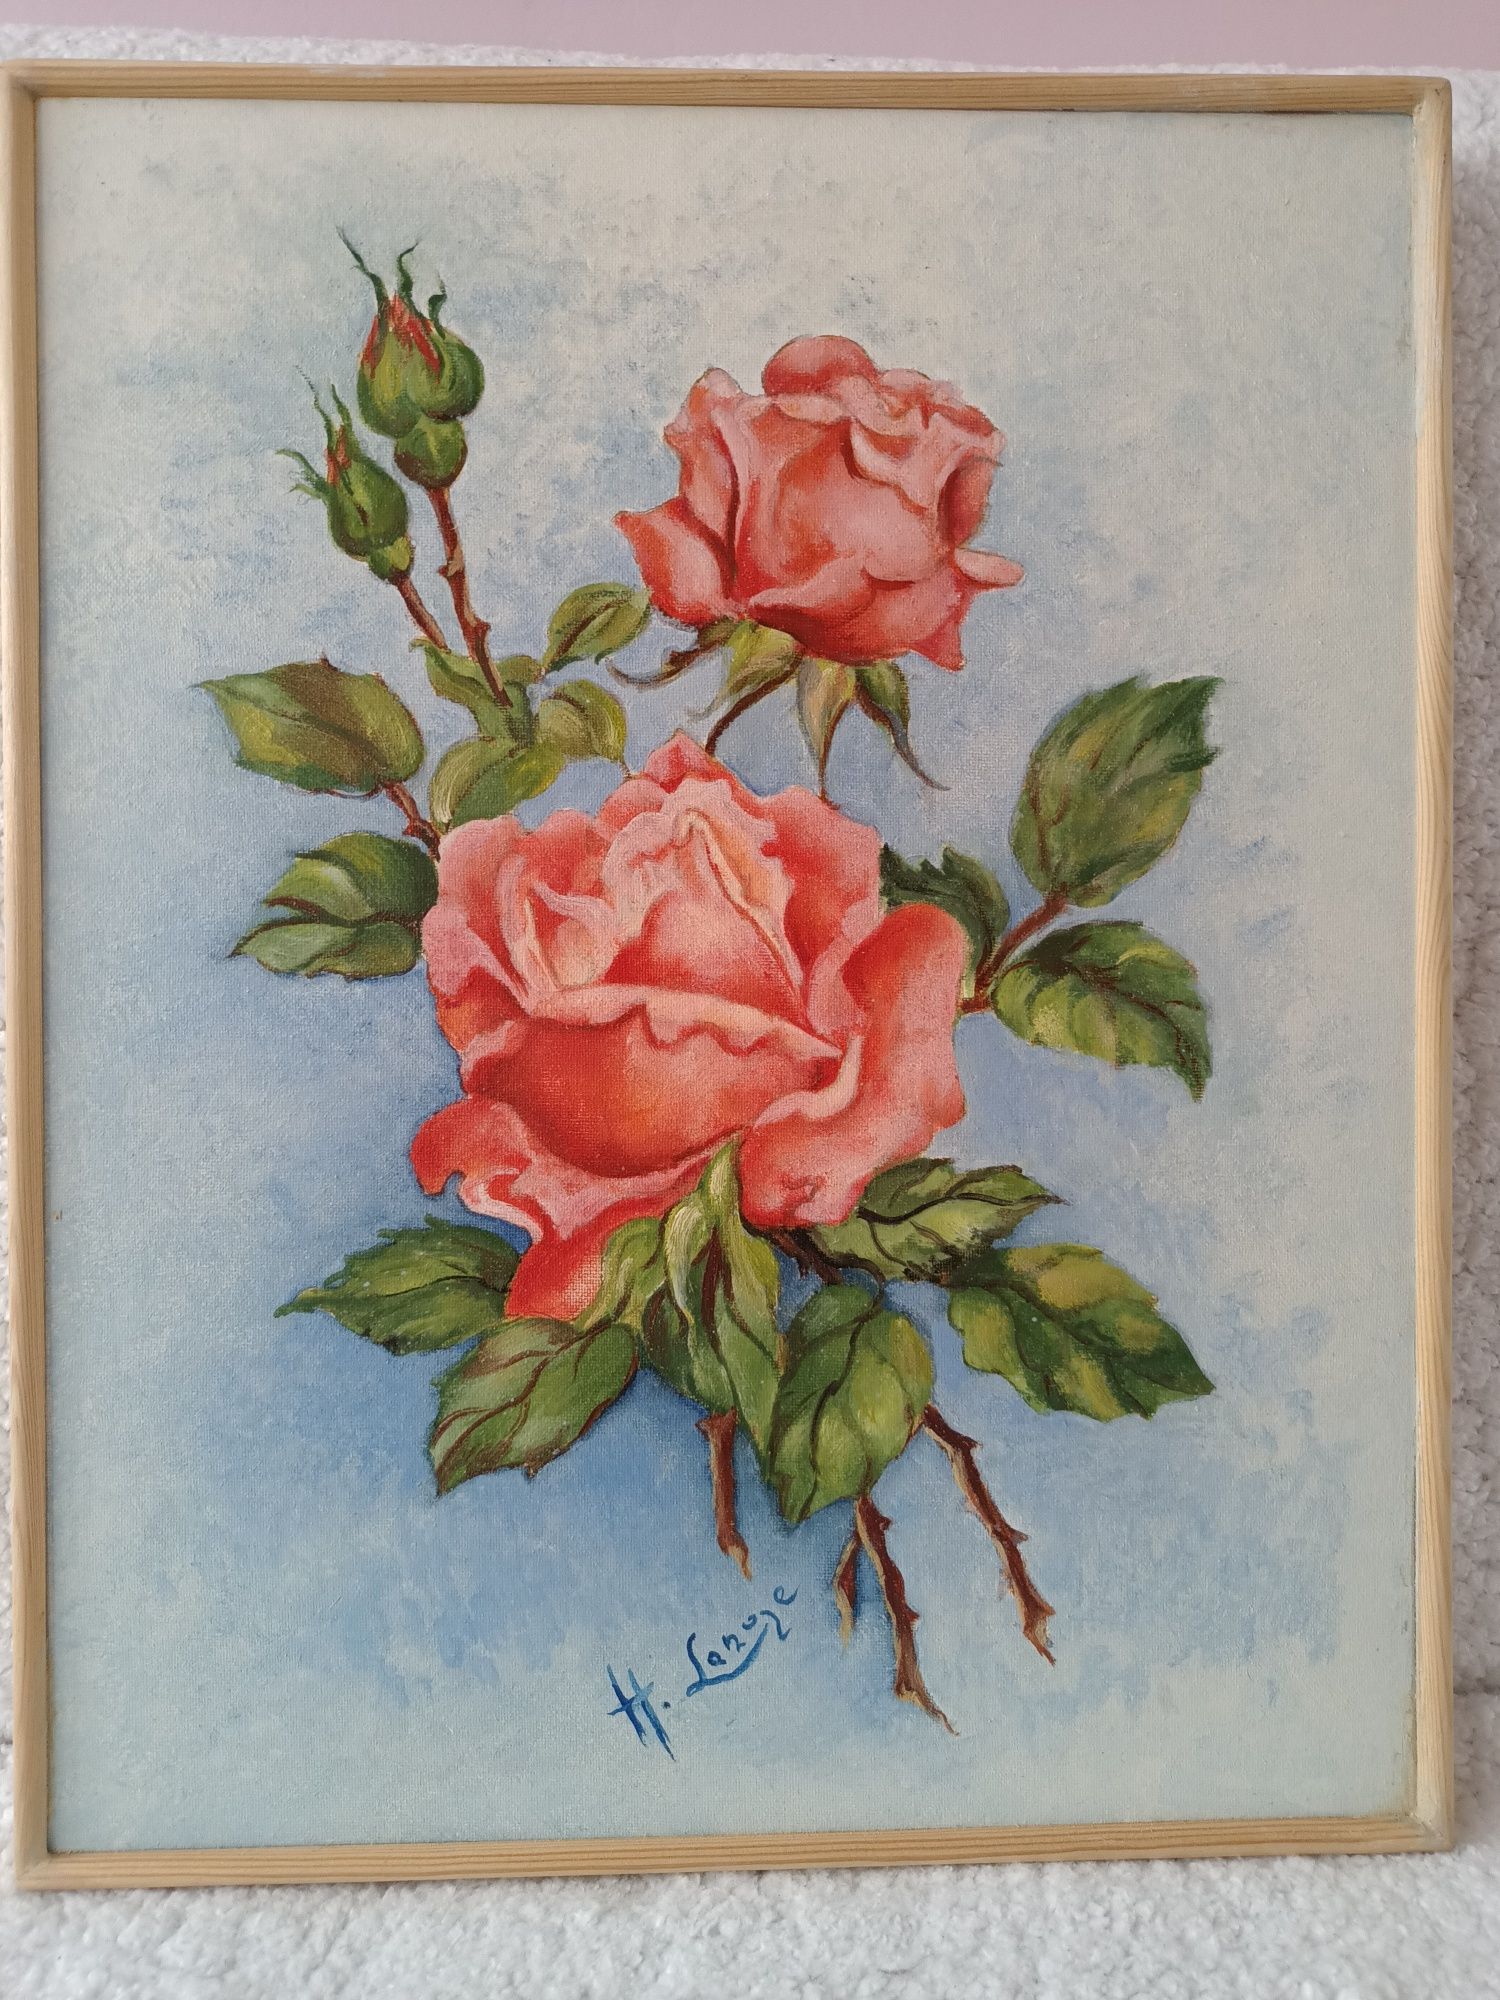 ,, Róże" obraz H. Lange 51,5x40,5